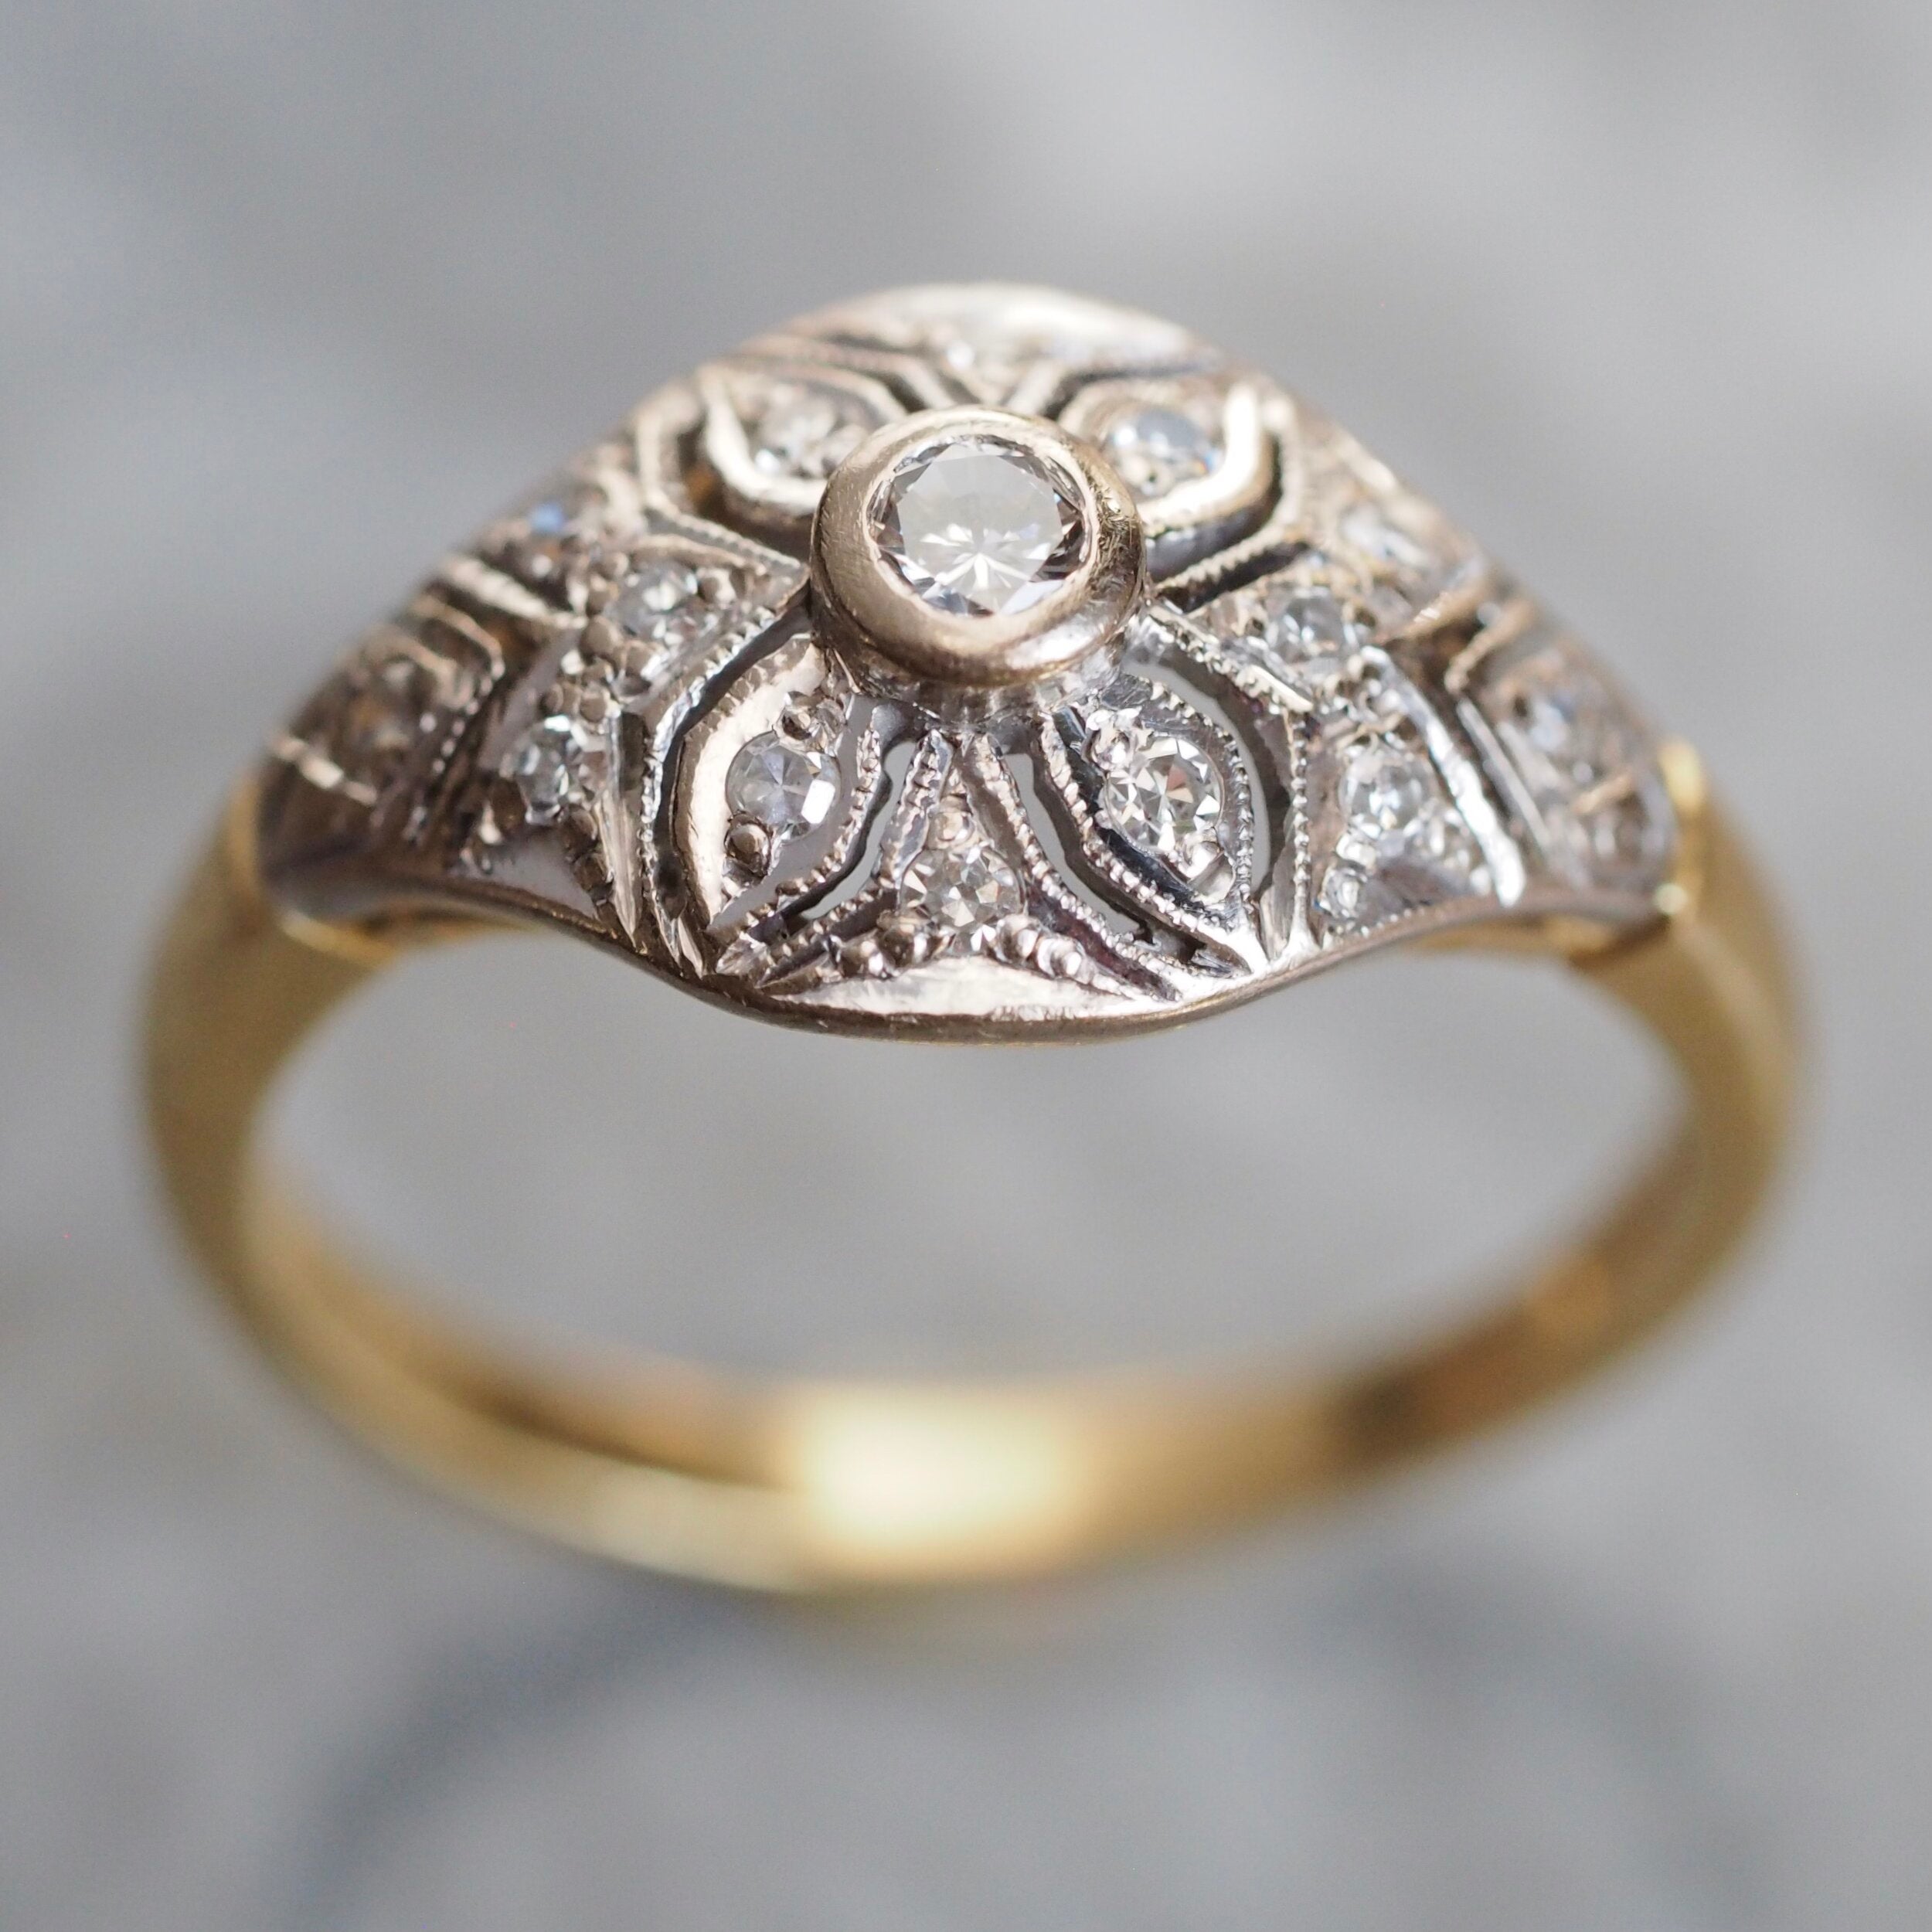 Vintage English Art Deco Style 18k Gold Diamond Engagement Ring